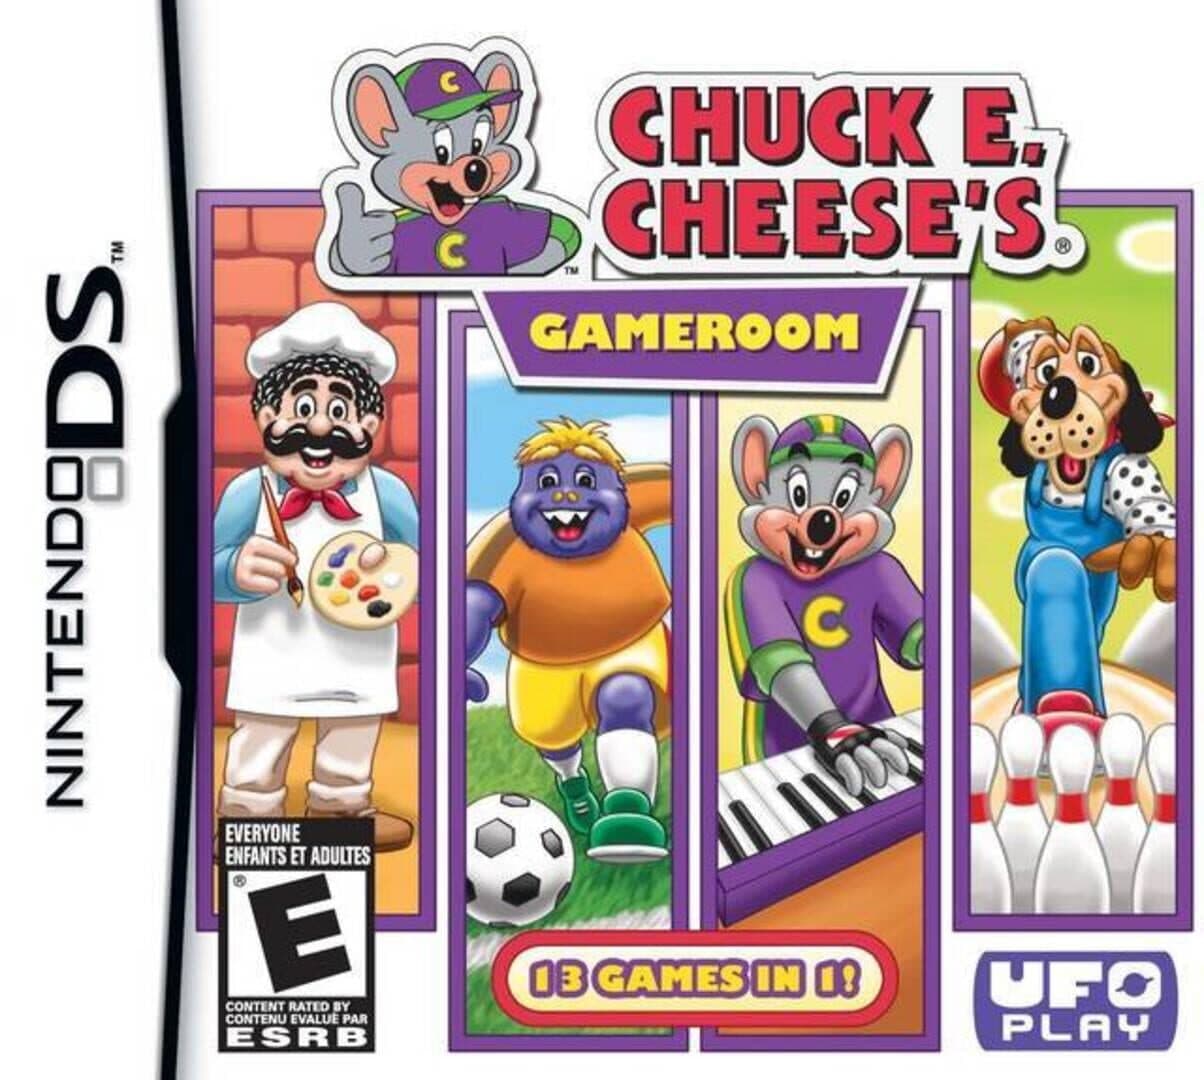 Chuck E. Cheese's Gameroom cover art